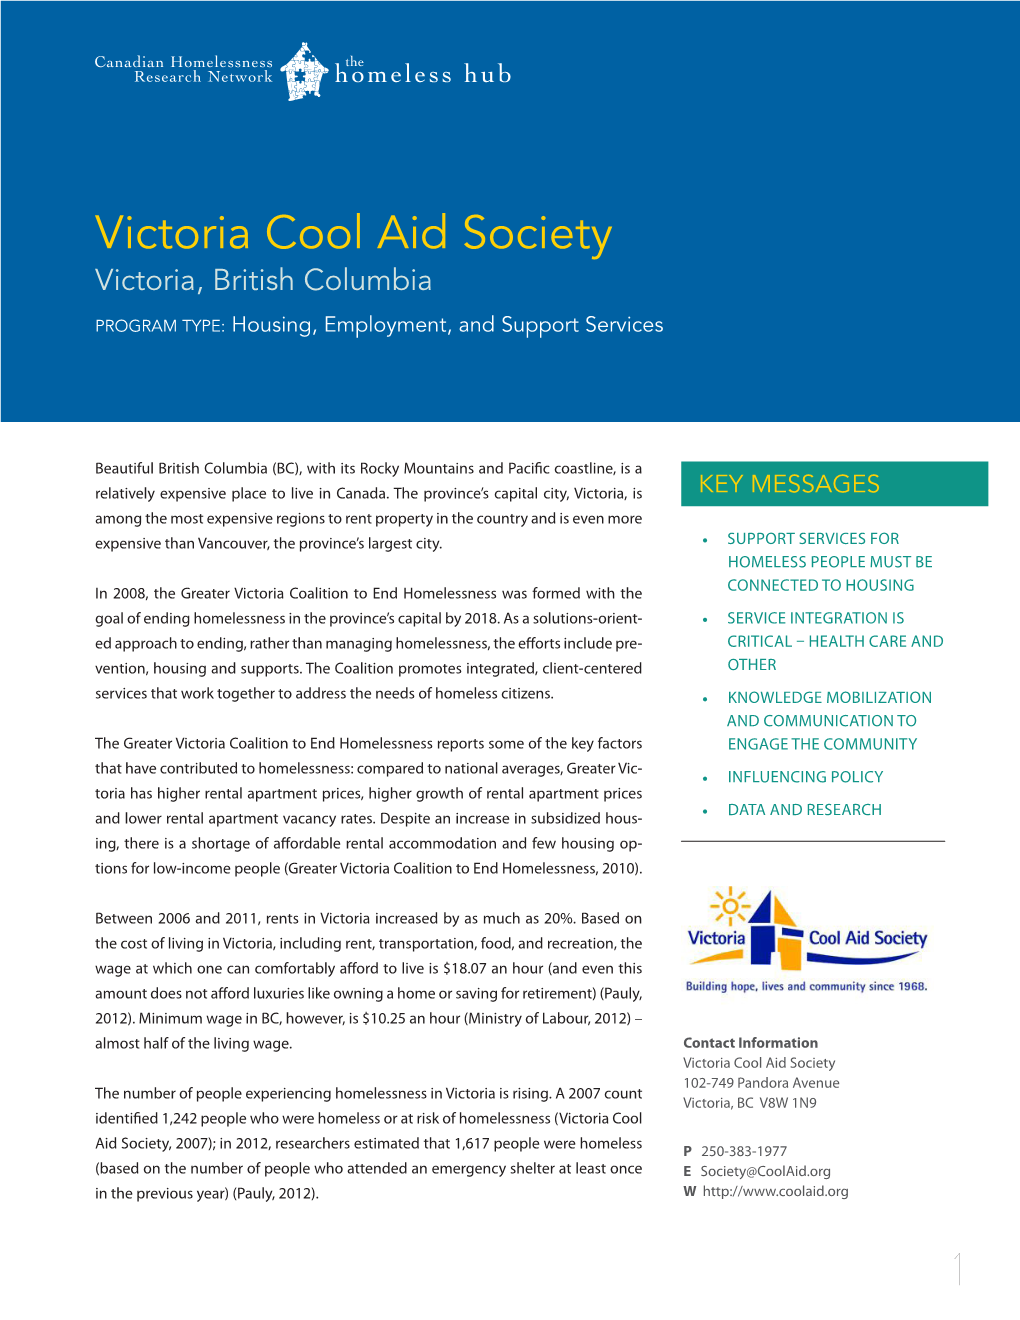 Victoria Cool Aid Society Victoria, British Columbia